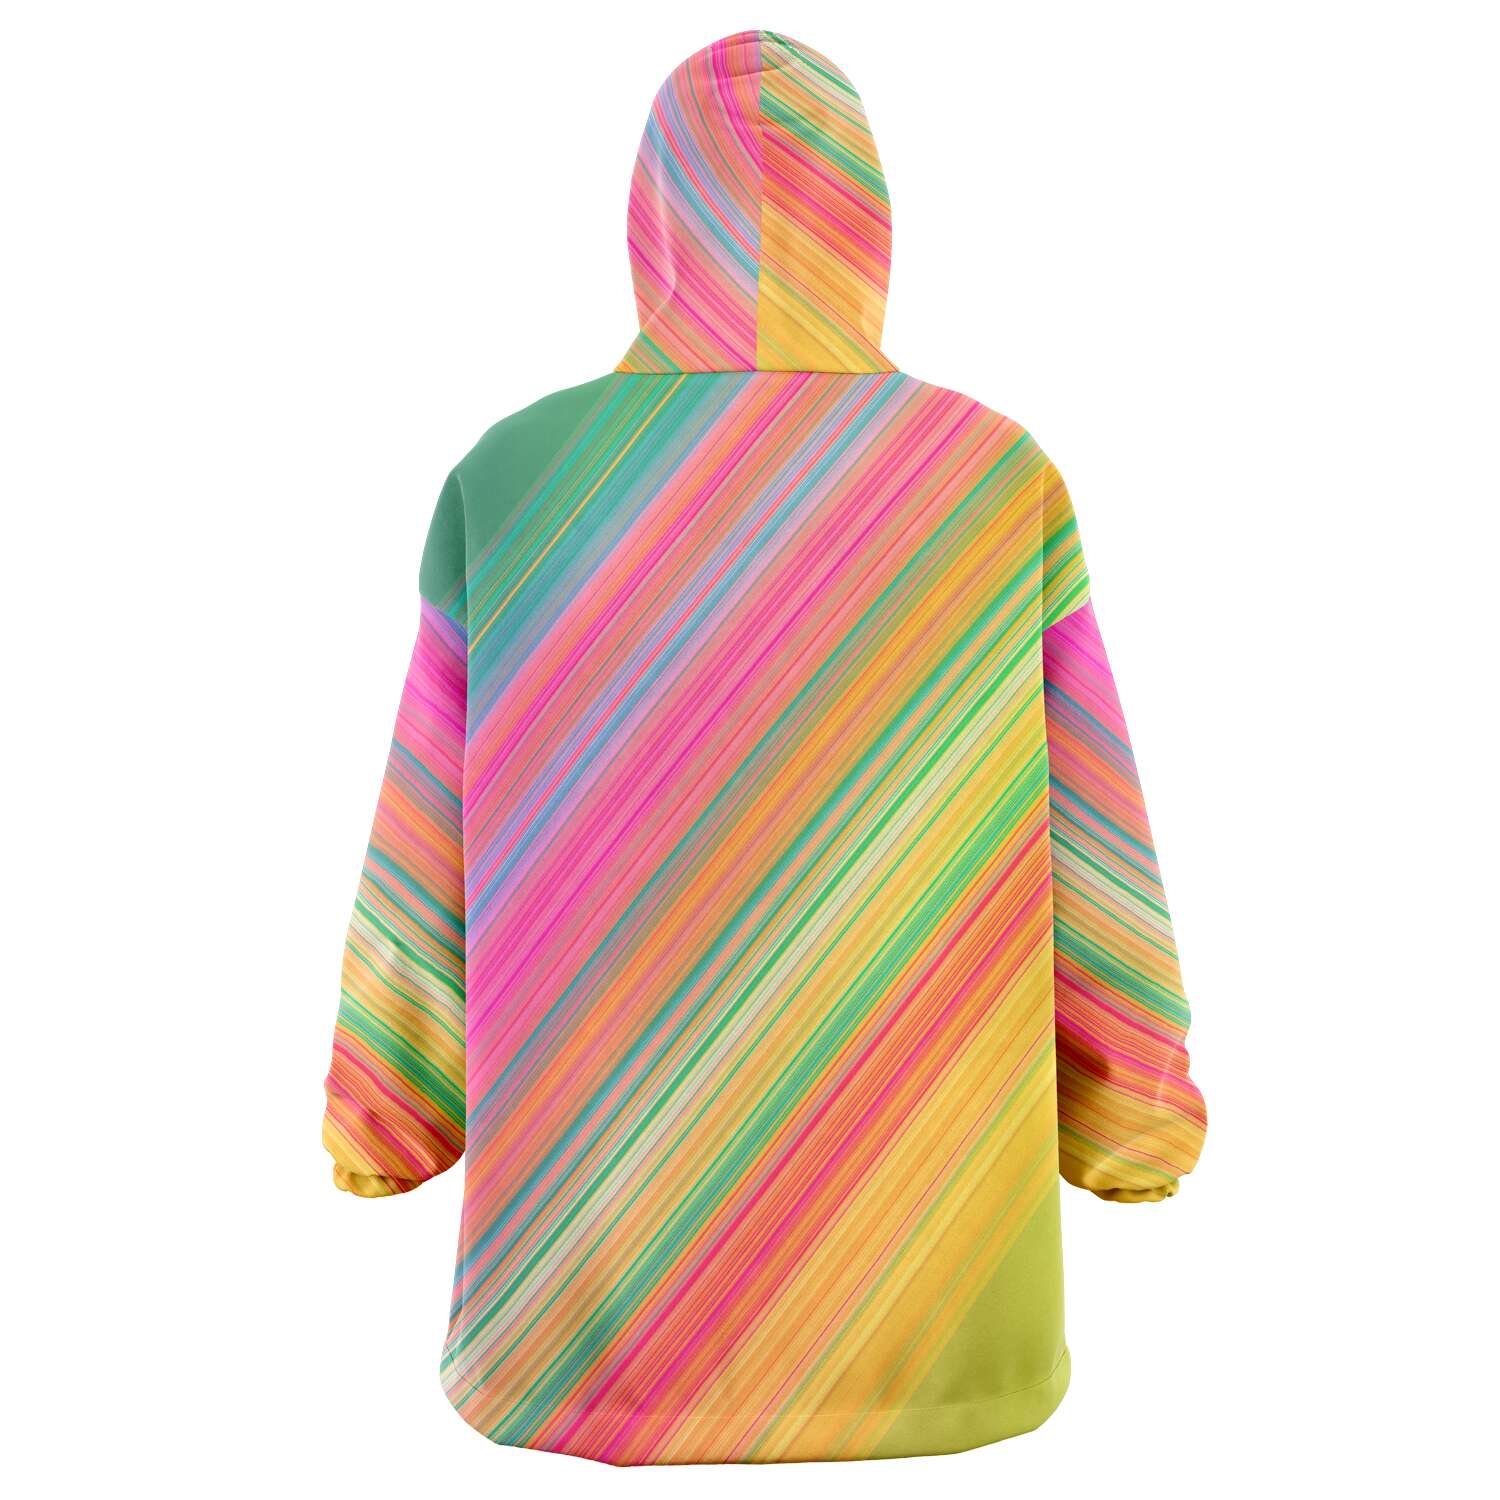 Rainbow oversized giant hoodie